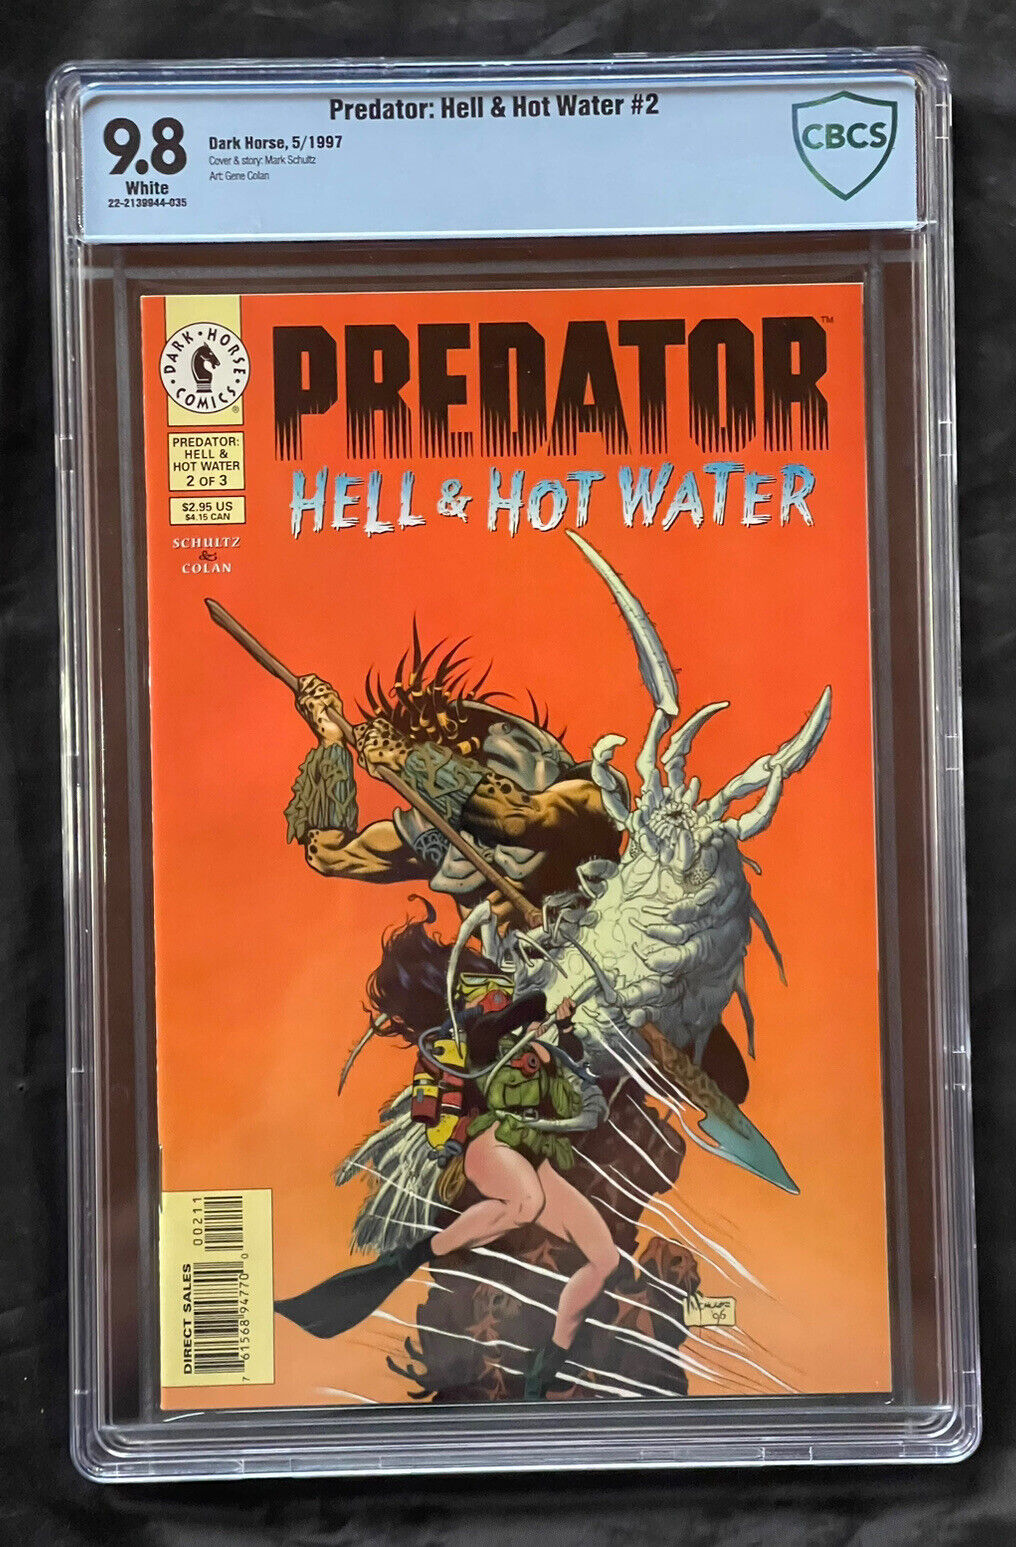 Predator Hell & Hot Water #2 CBCS Graded 9.8 Dark Horse May 1997 Comic Book.